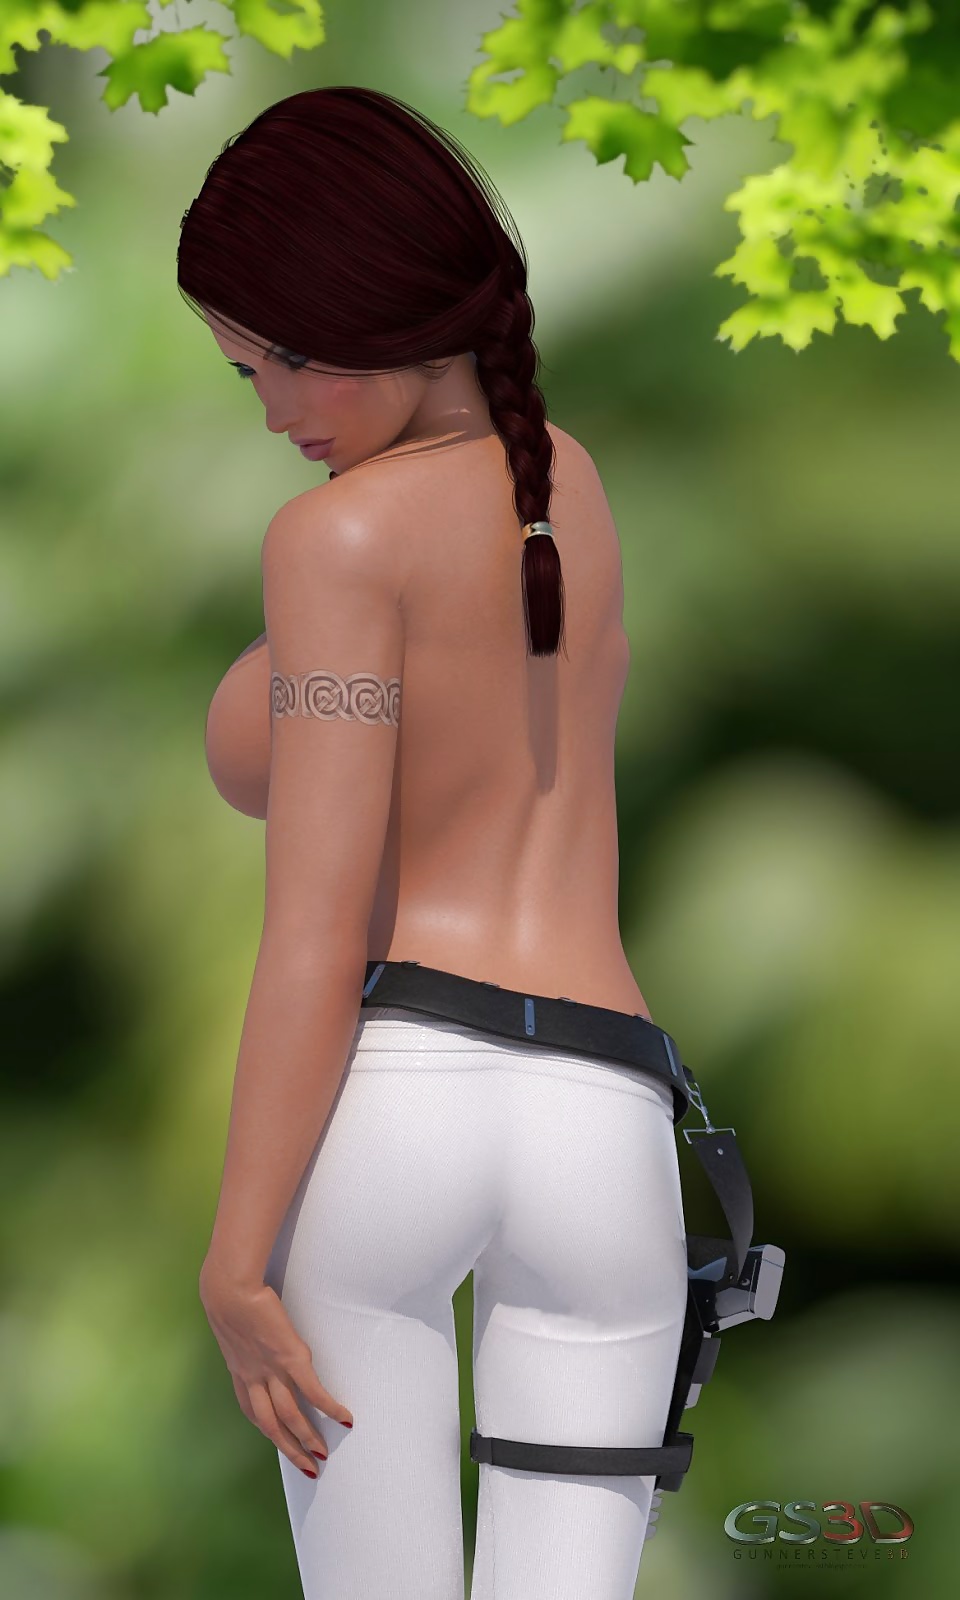 Laras Mix - Ultra Realismus 3d Porn #26948543